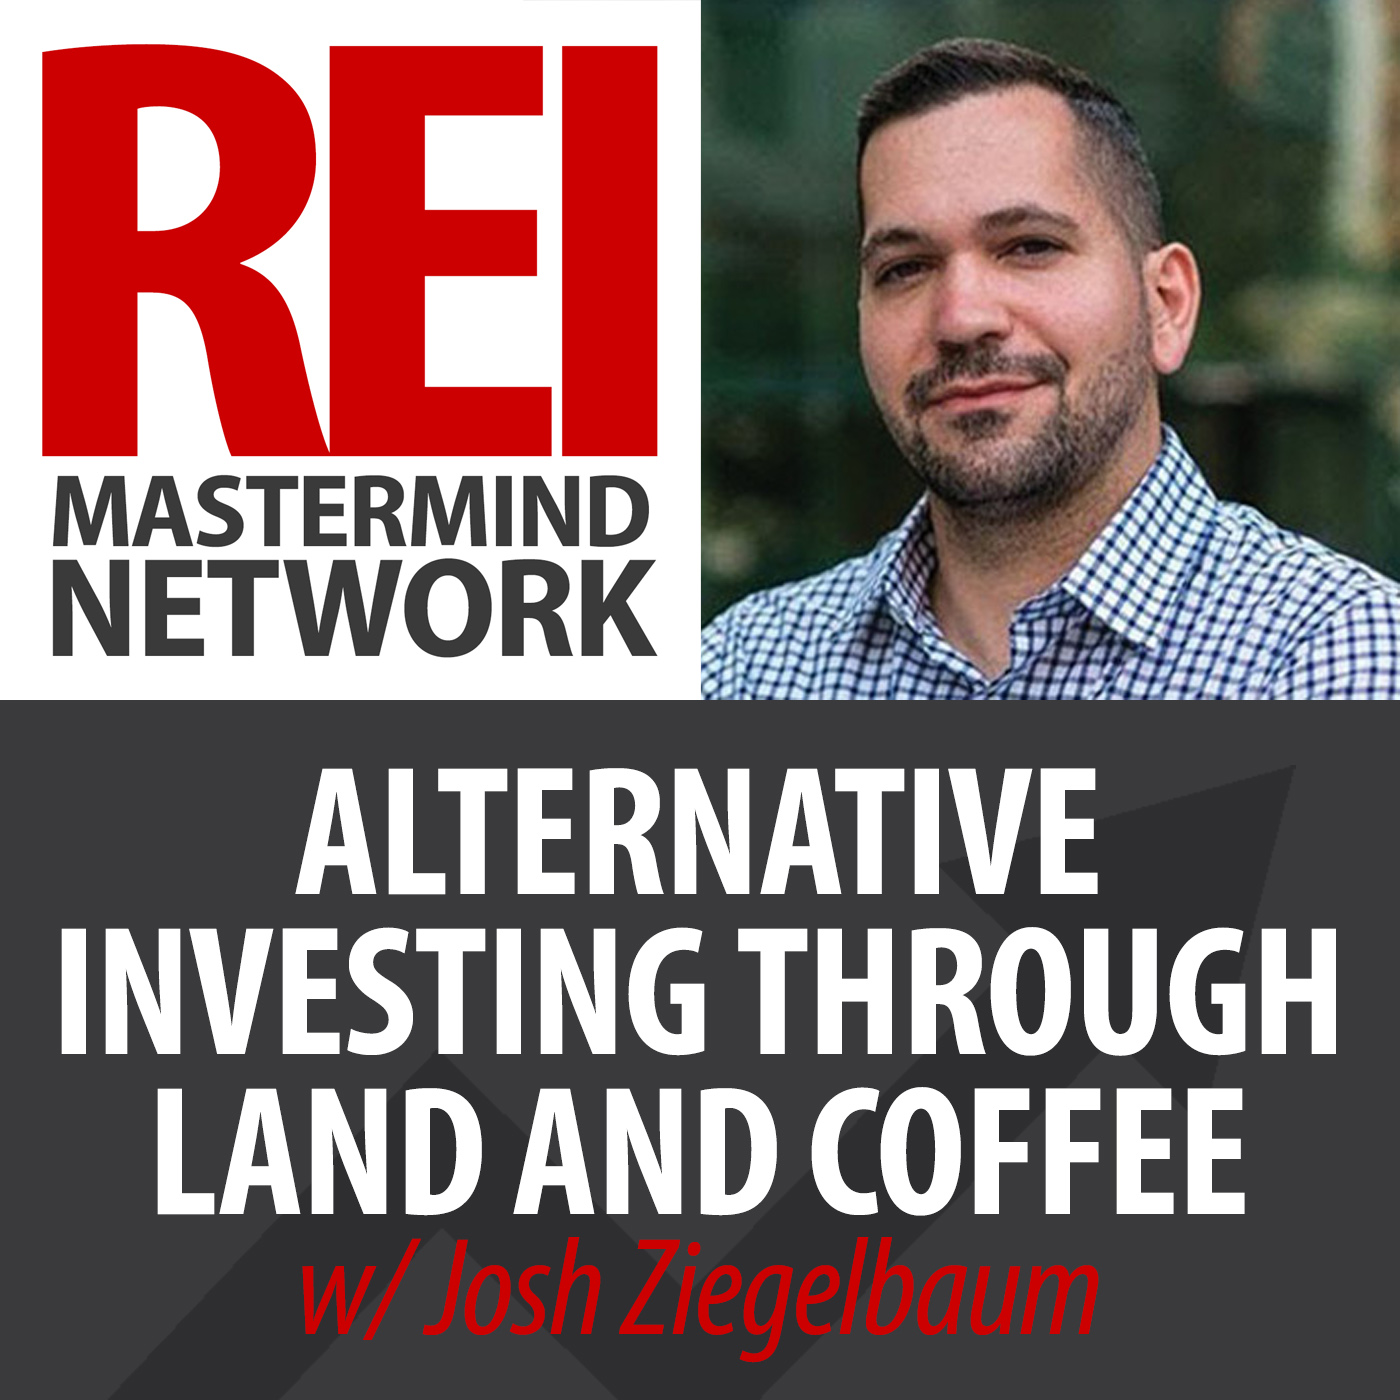 Alternative Investing Through Land and Coffee with Josh Ziegelbaum Image